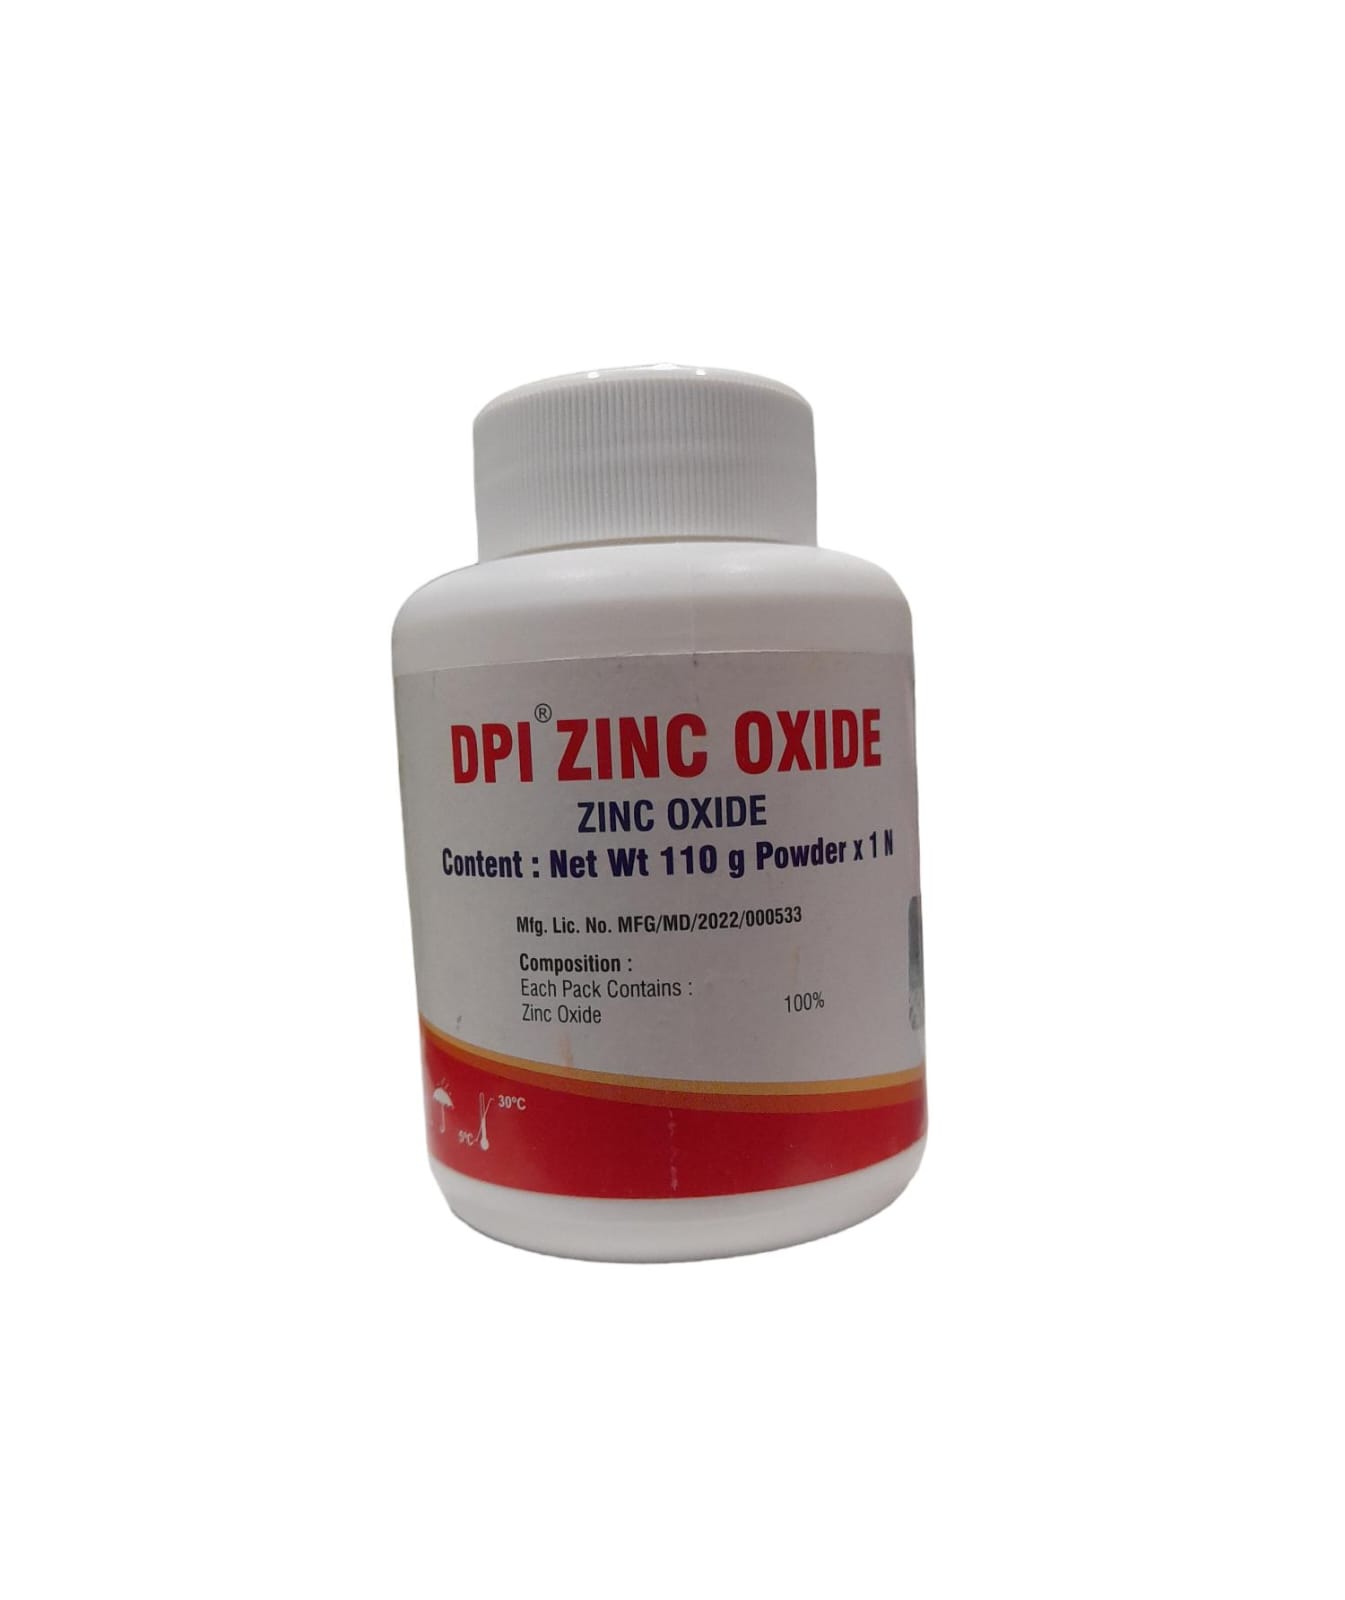 Dpi zinc oxide powder